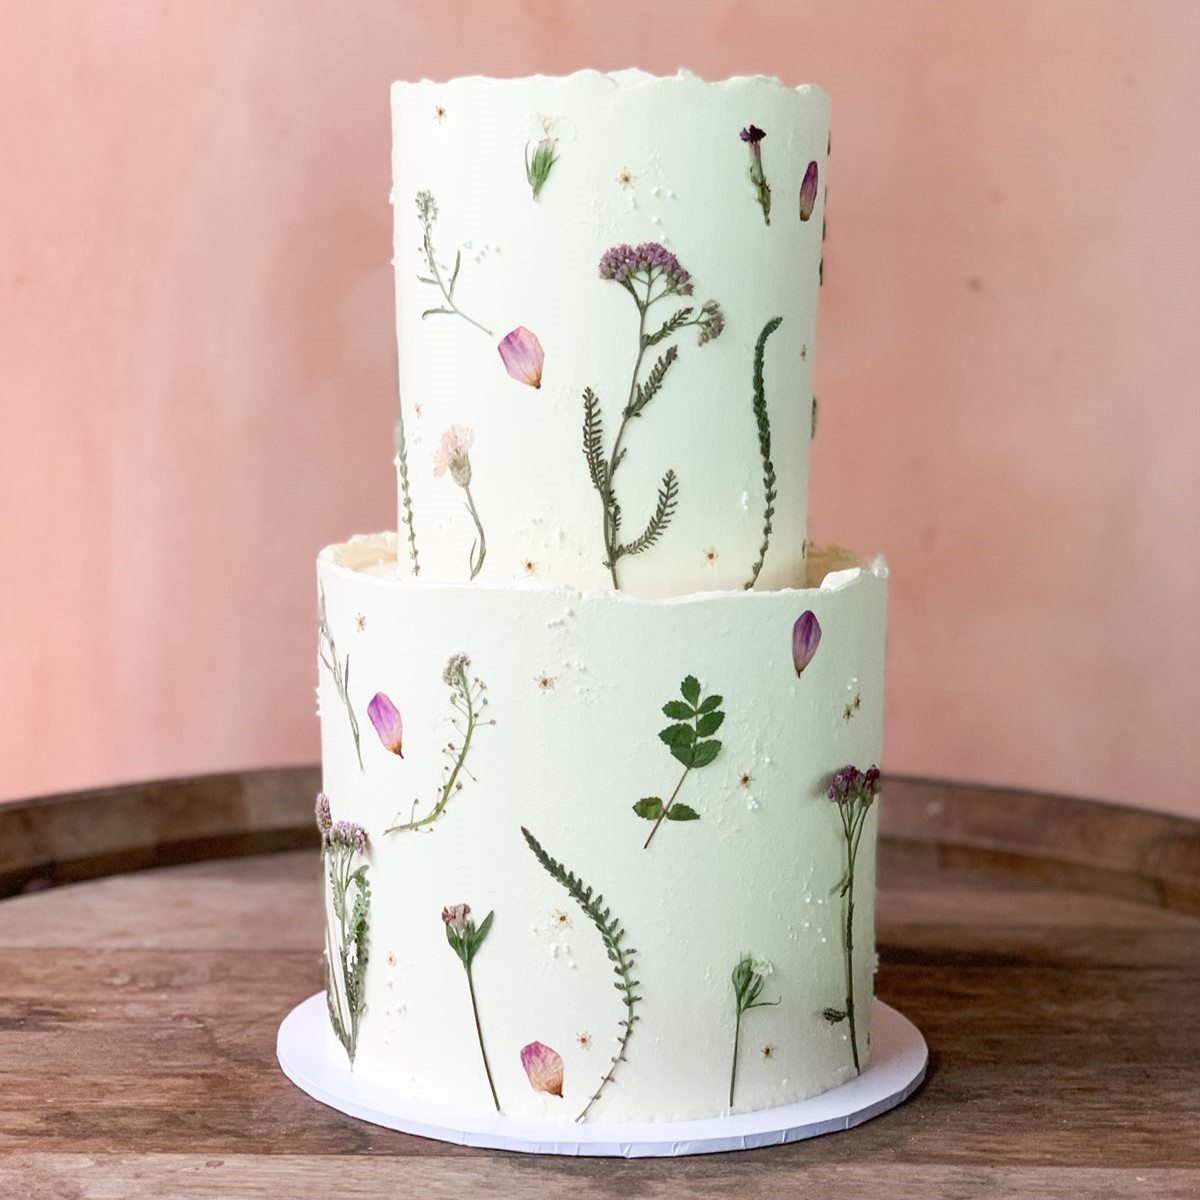 Popular wedding cake trends dried florals